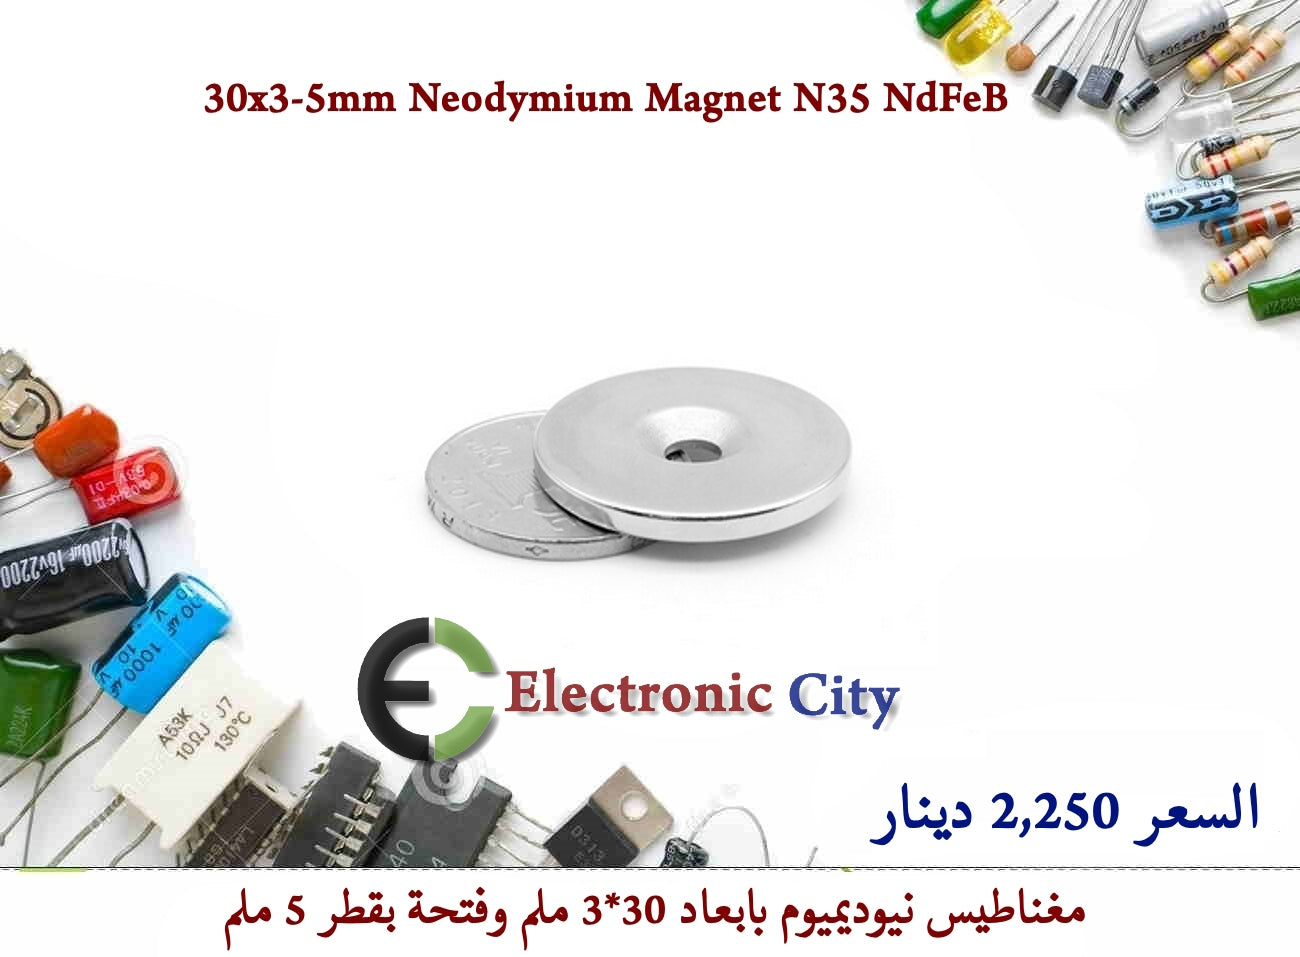 30x3-5mm Neodymium Magnet N35 NdFeB